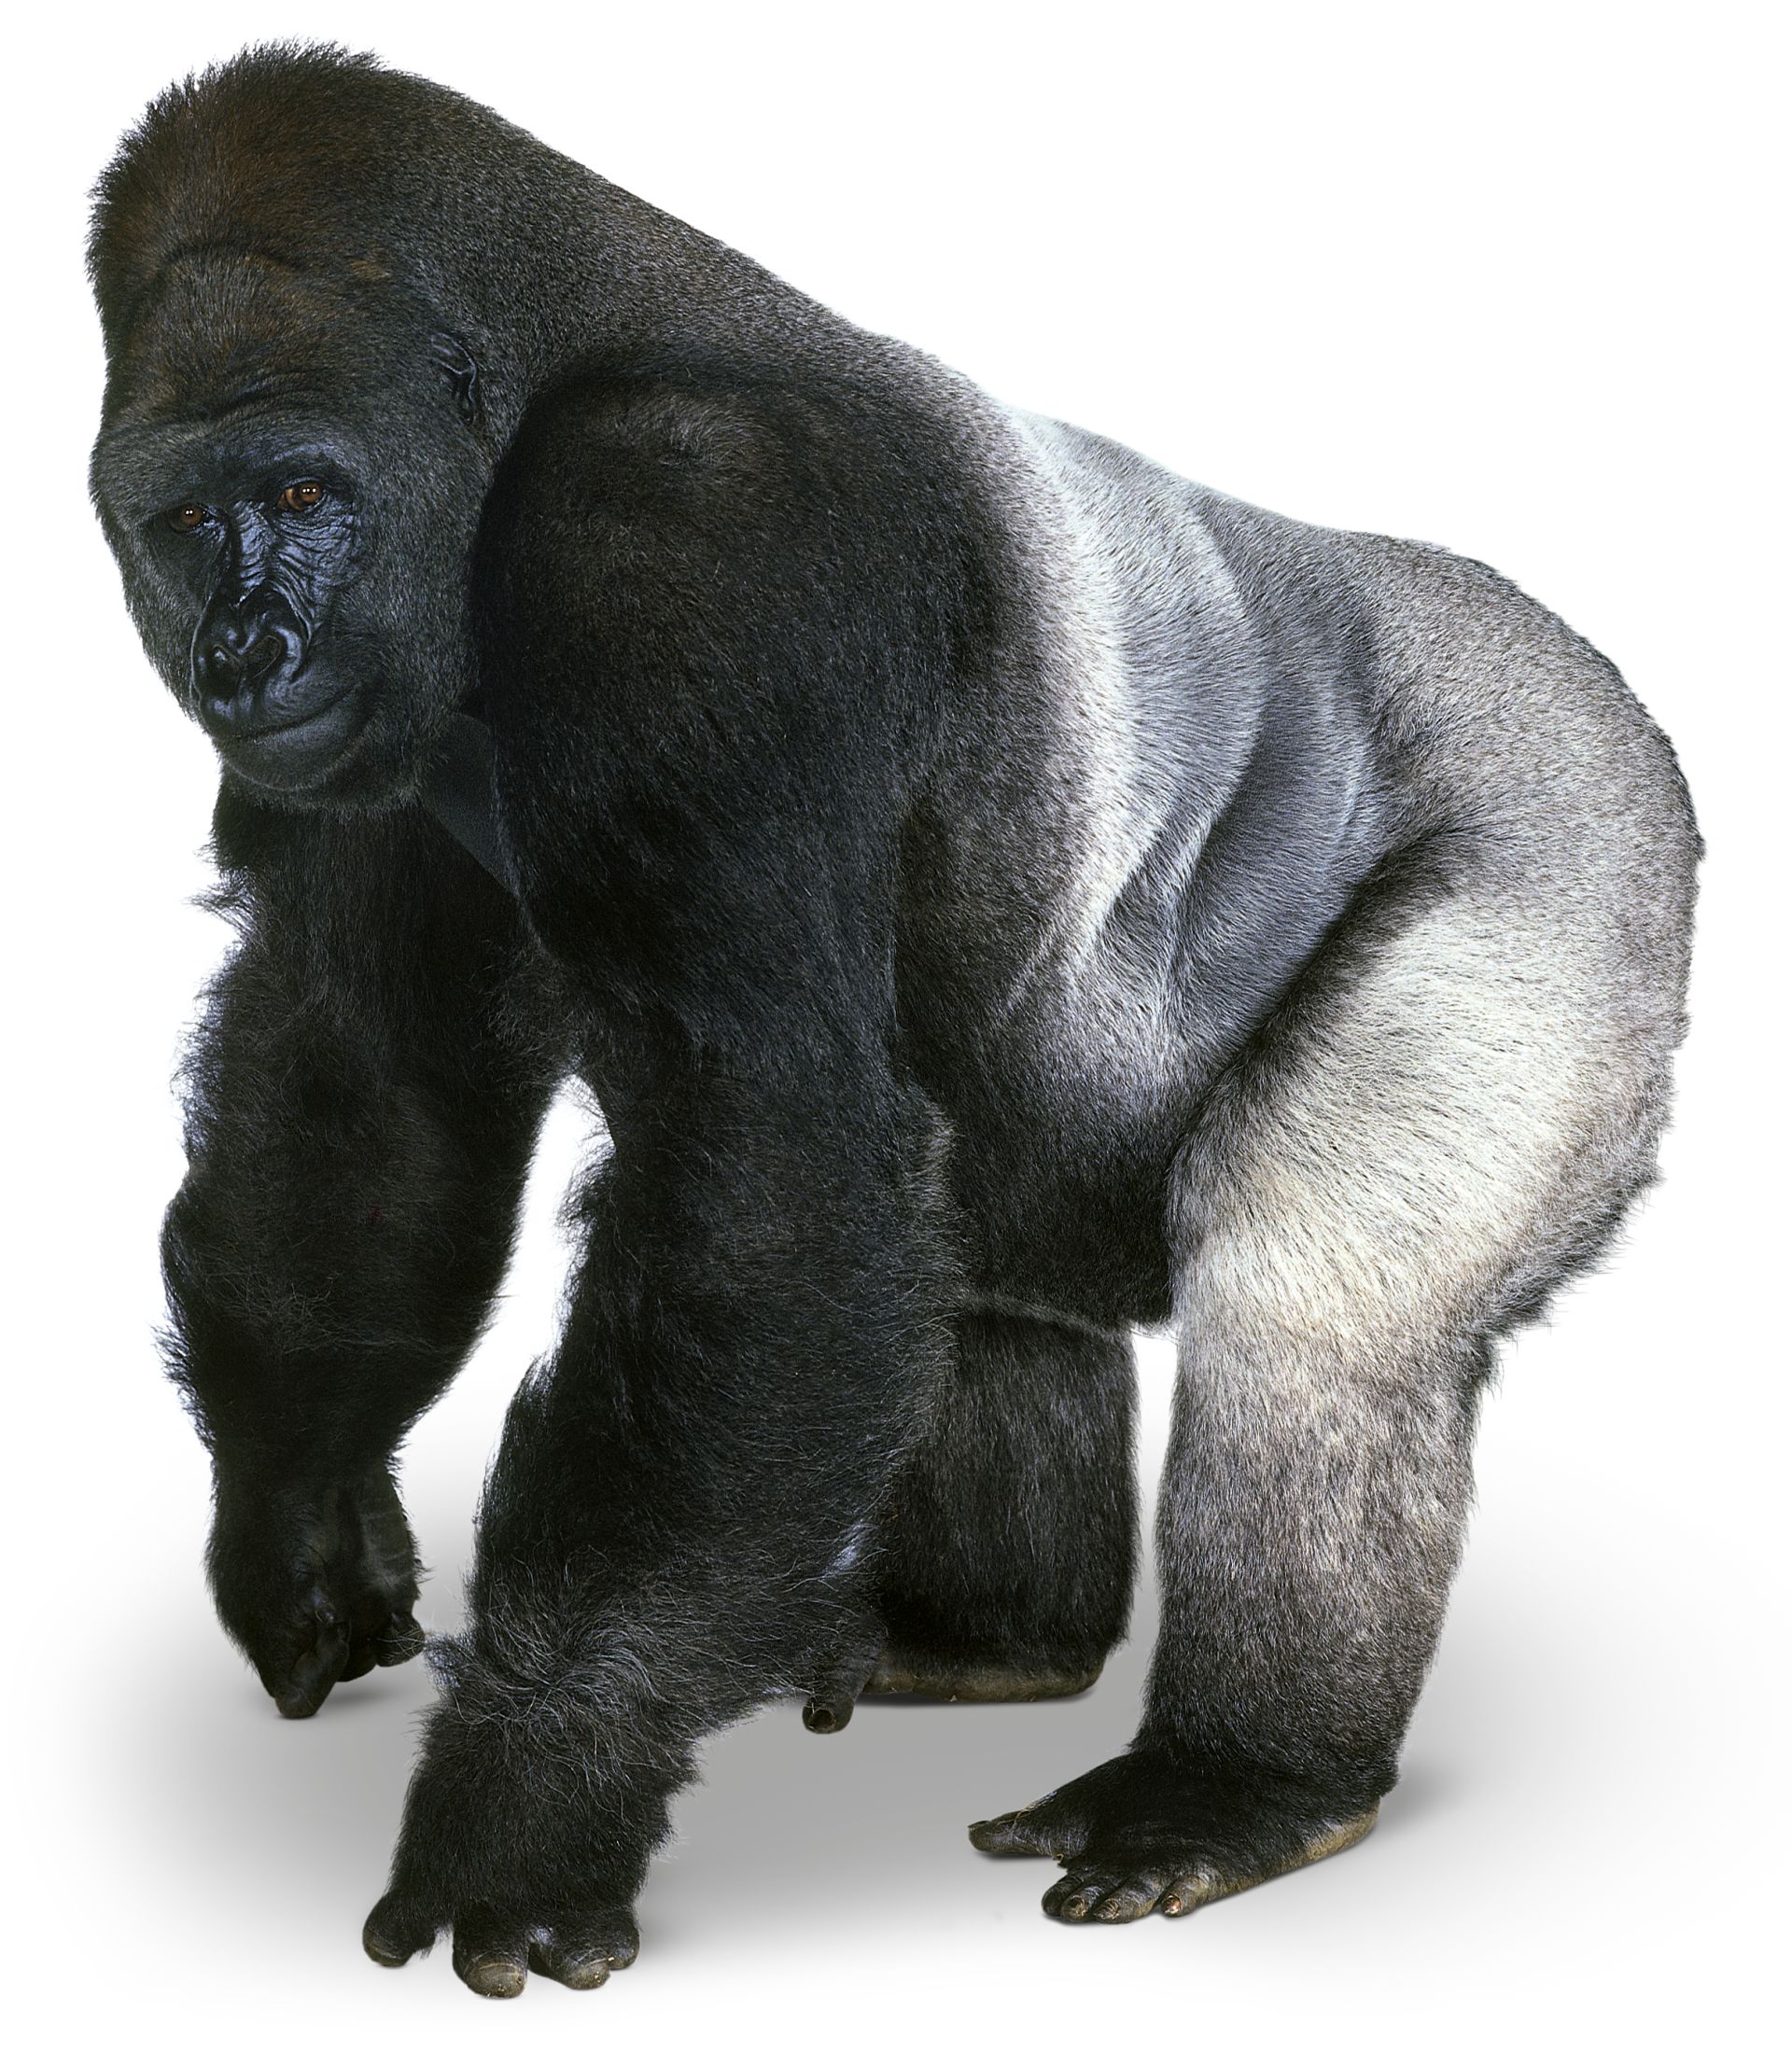 Gorilla Facts for Kids | Silverback Gorilla | DK Find Out